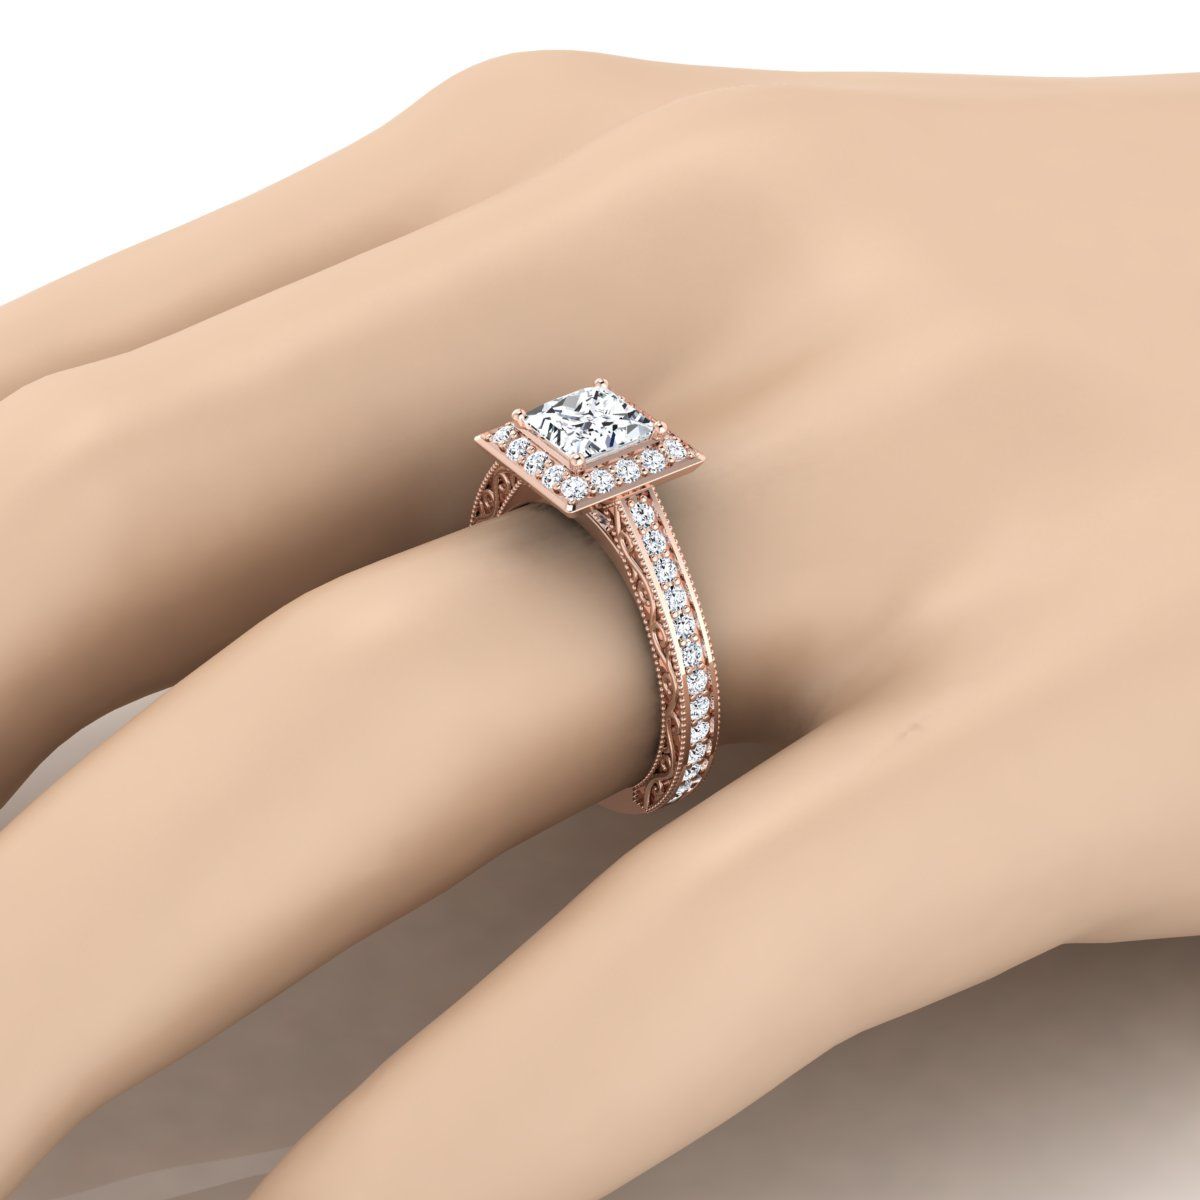 14K Rose Gold Princess Cut Hand-Engraved Delicate Diamond Milgrain Engagement Ring -1/2ctw